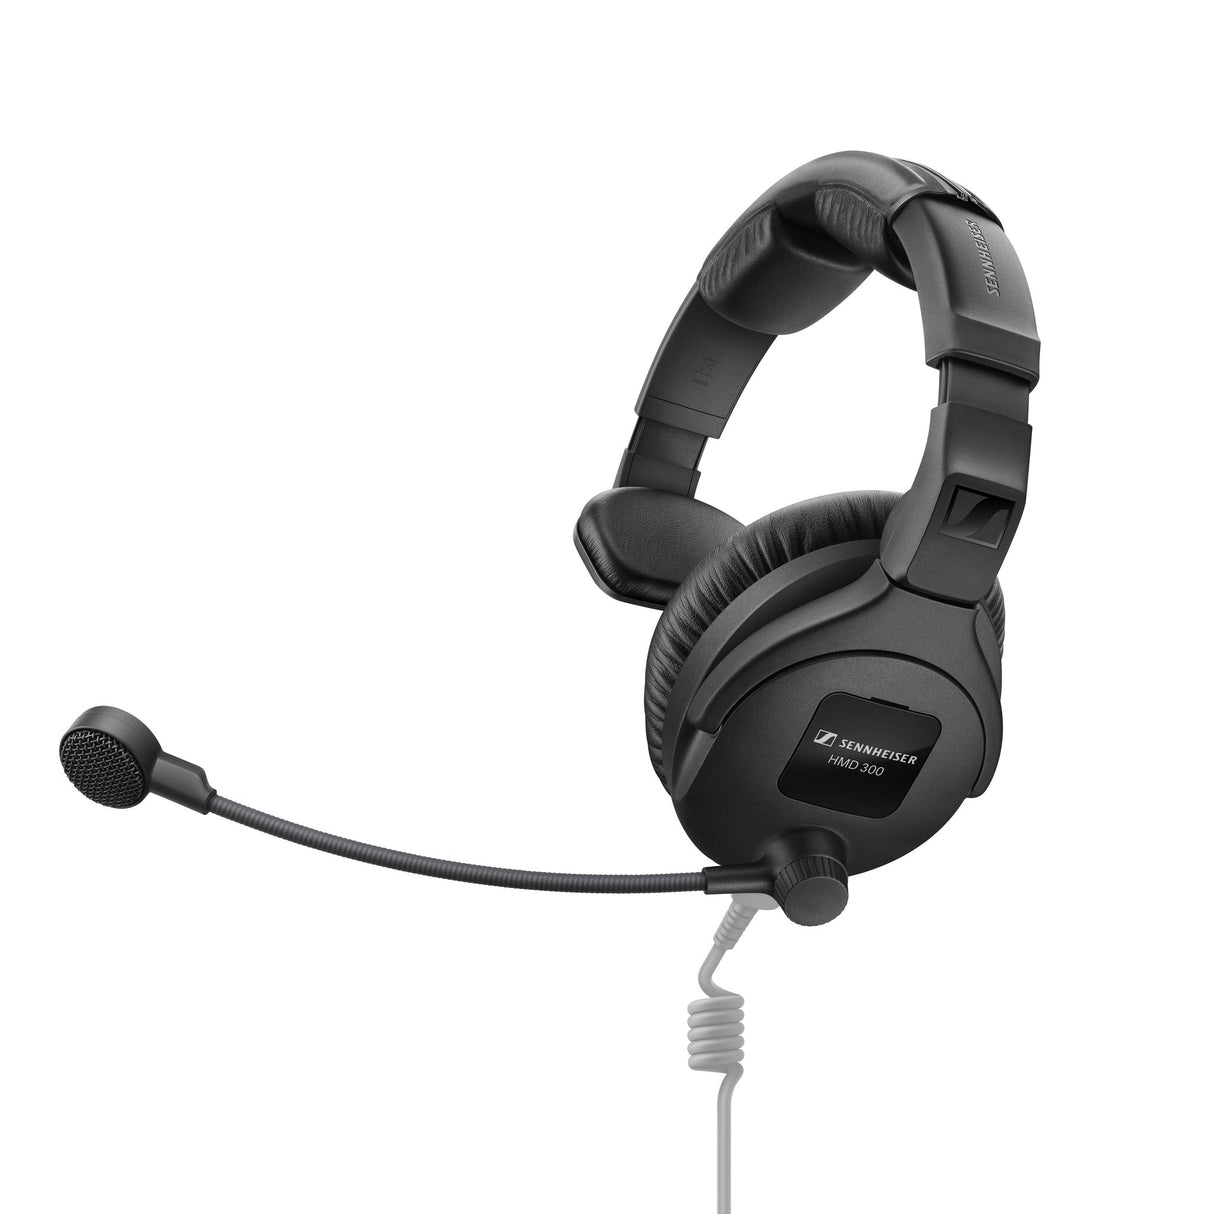 Sennheiser HMD 300 S Single-Sided Broadcast Dynamic Super-Cardioid Microphone Headset